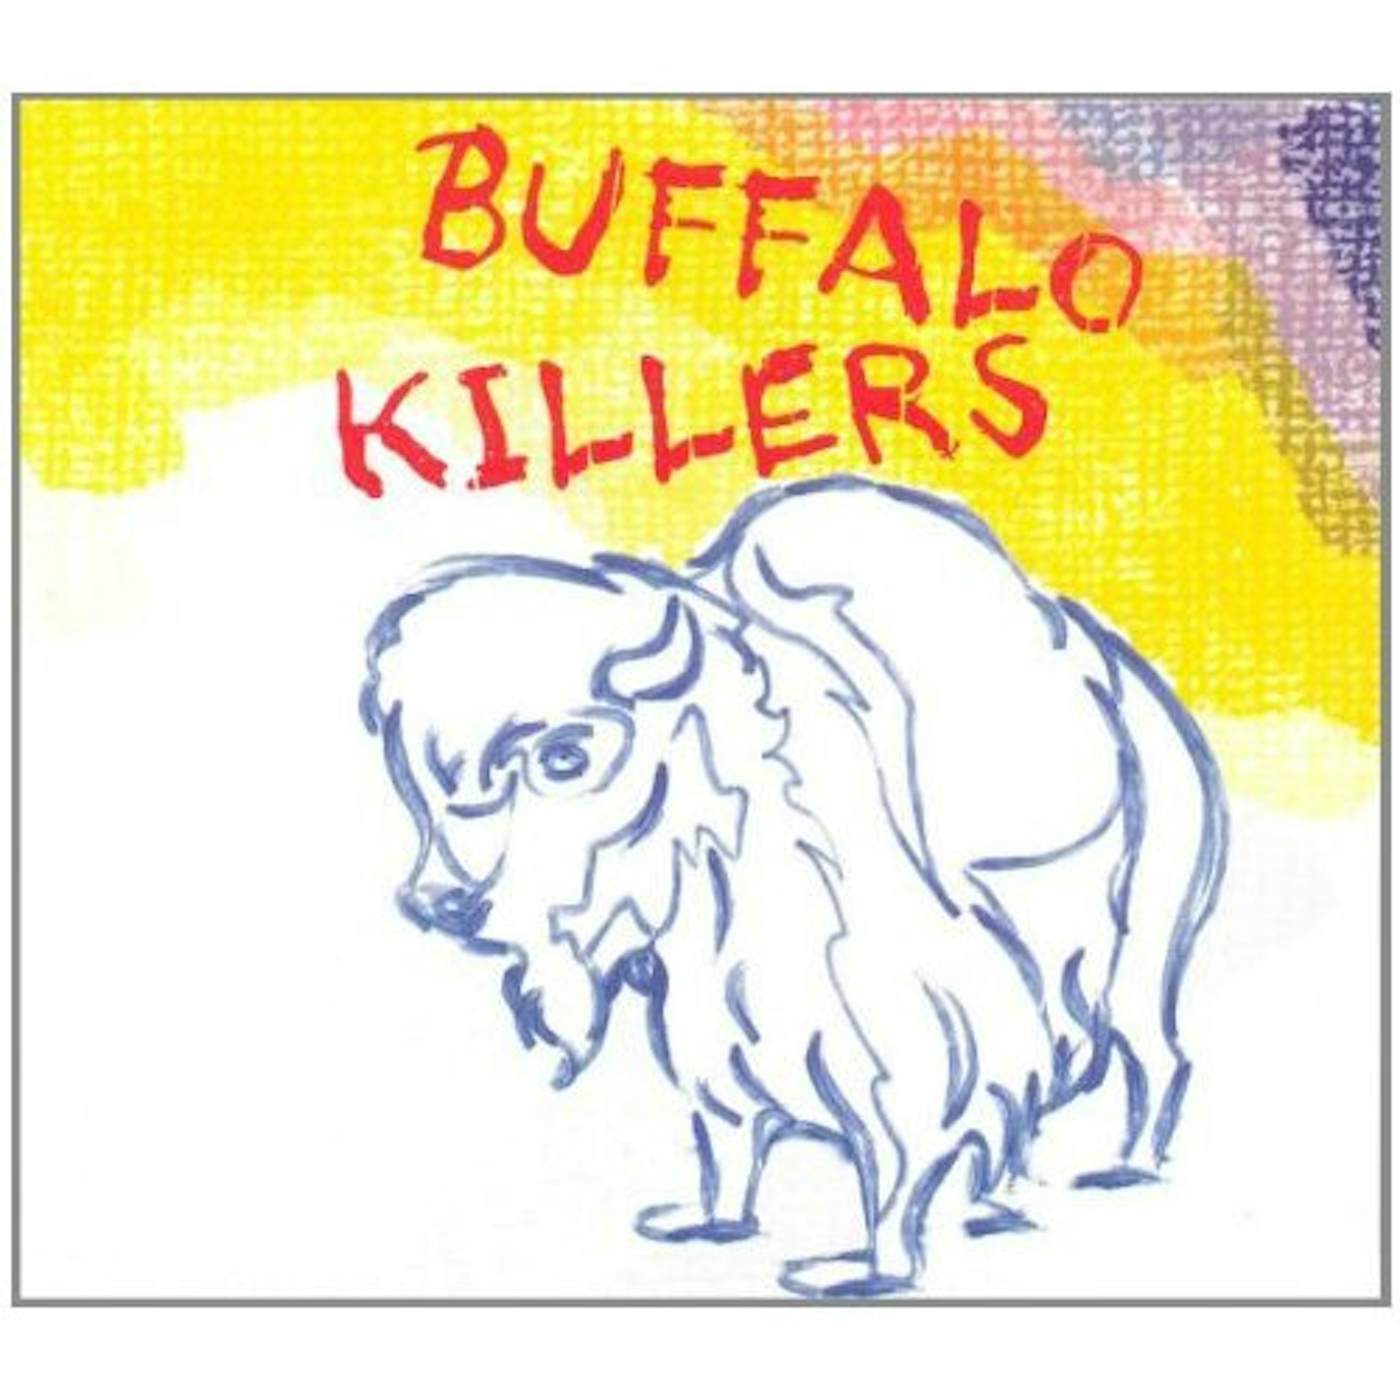 BUFFALO KILLERS CD